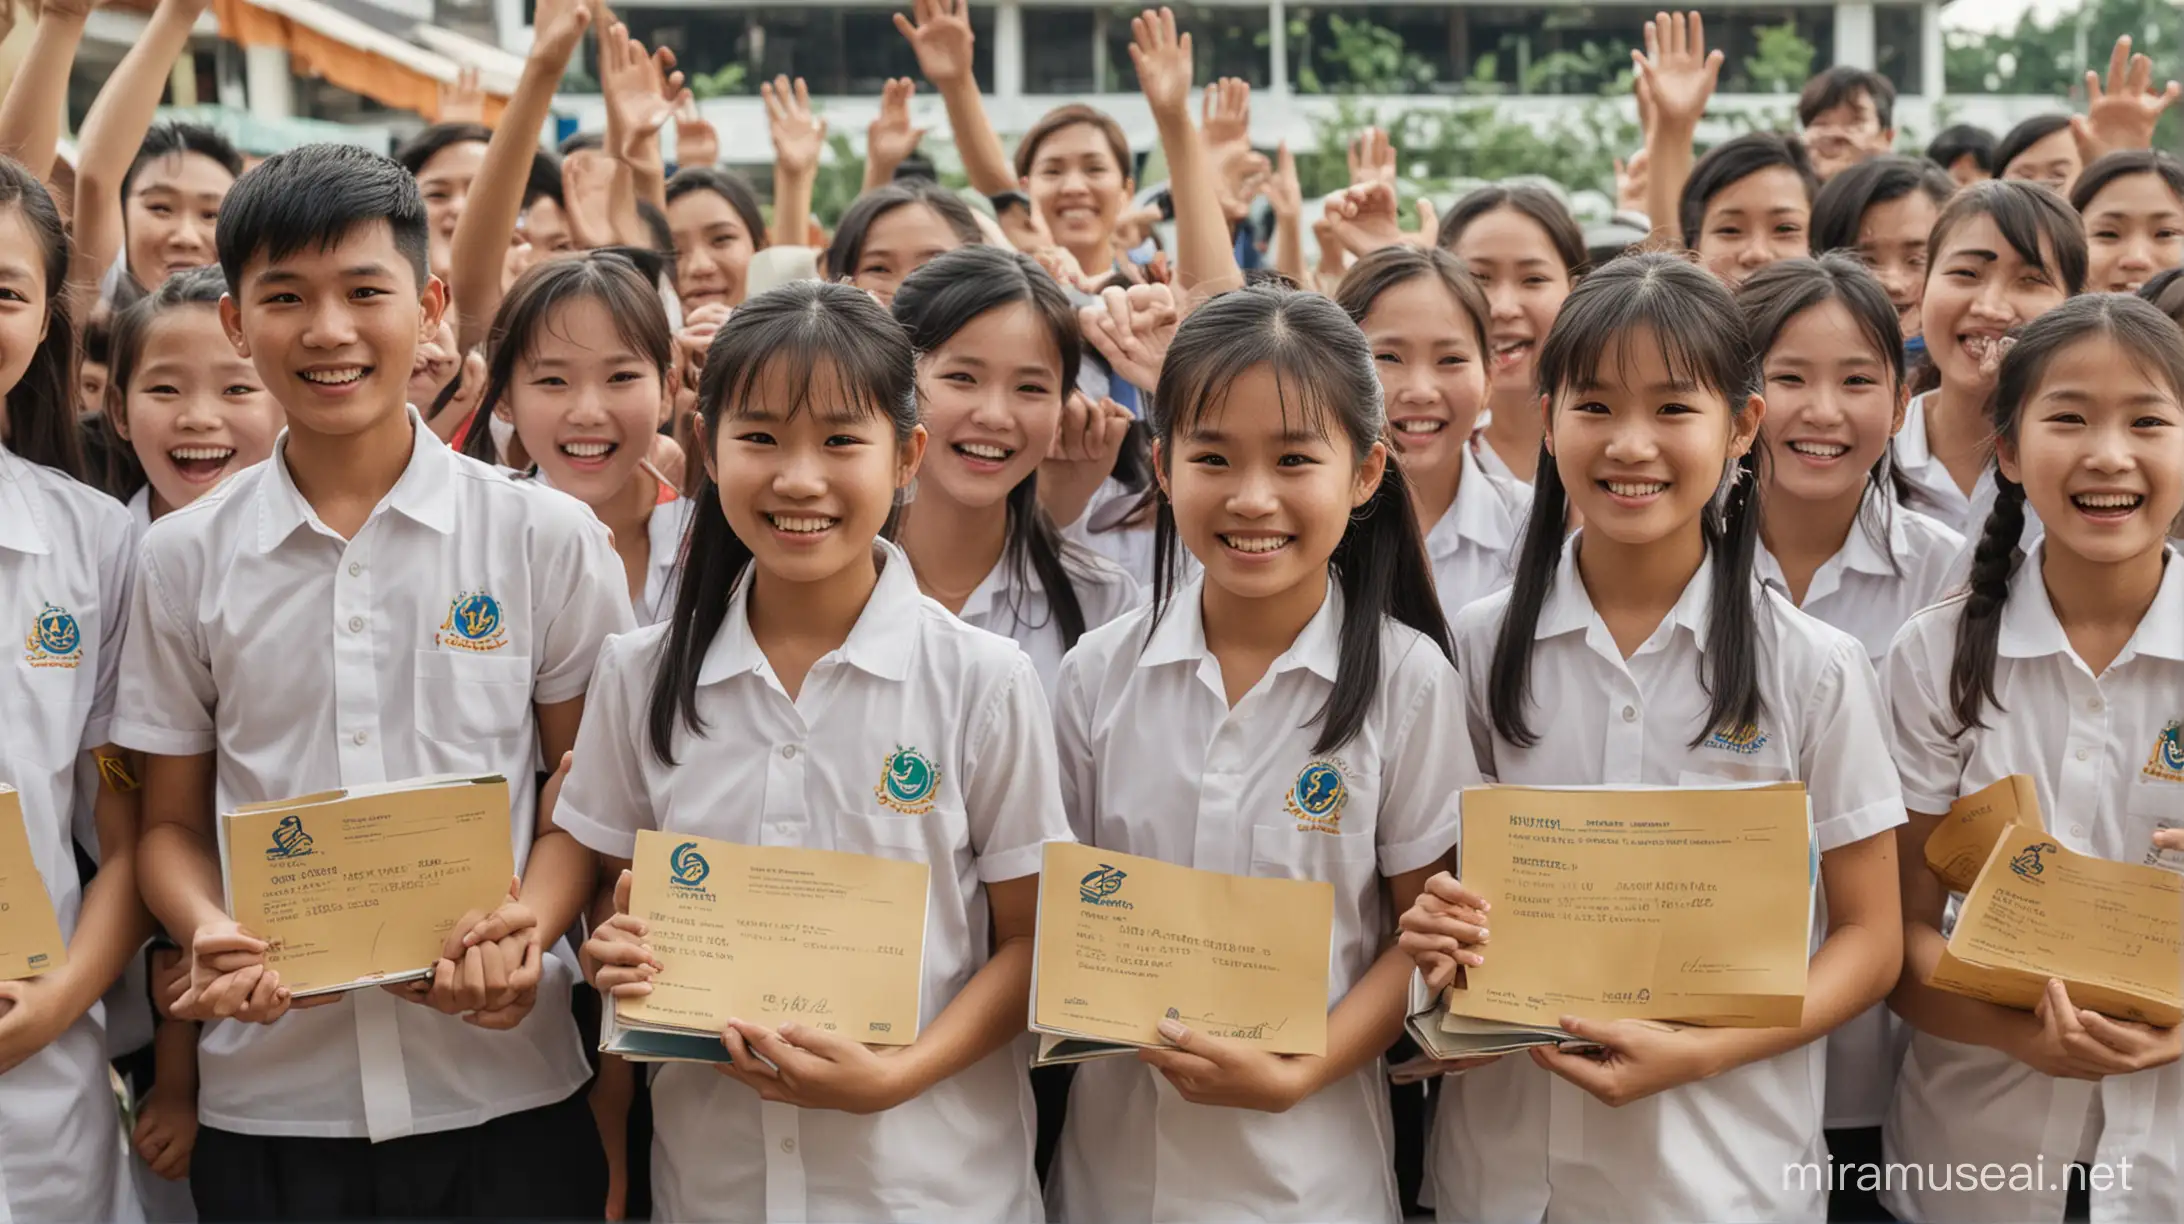 Vietnamese Elementary School Children Celebrate Summer Arena Victory with Geniebook Scholarships